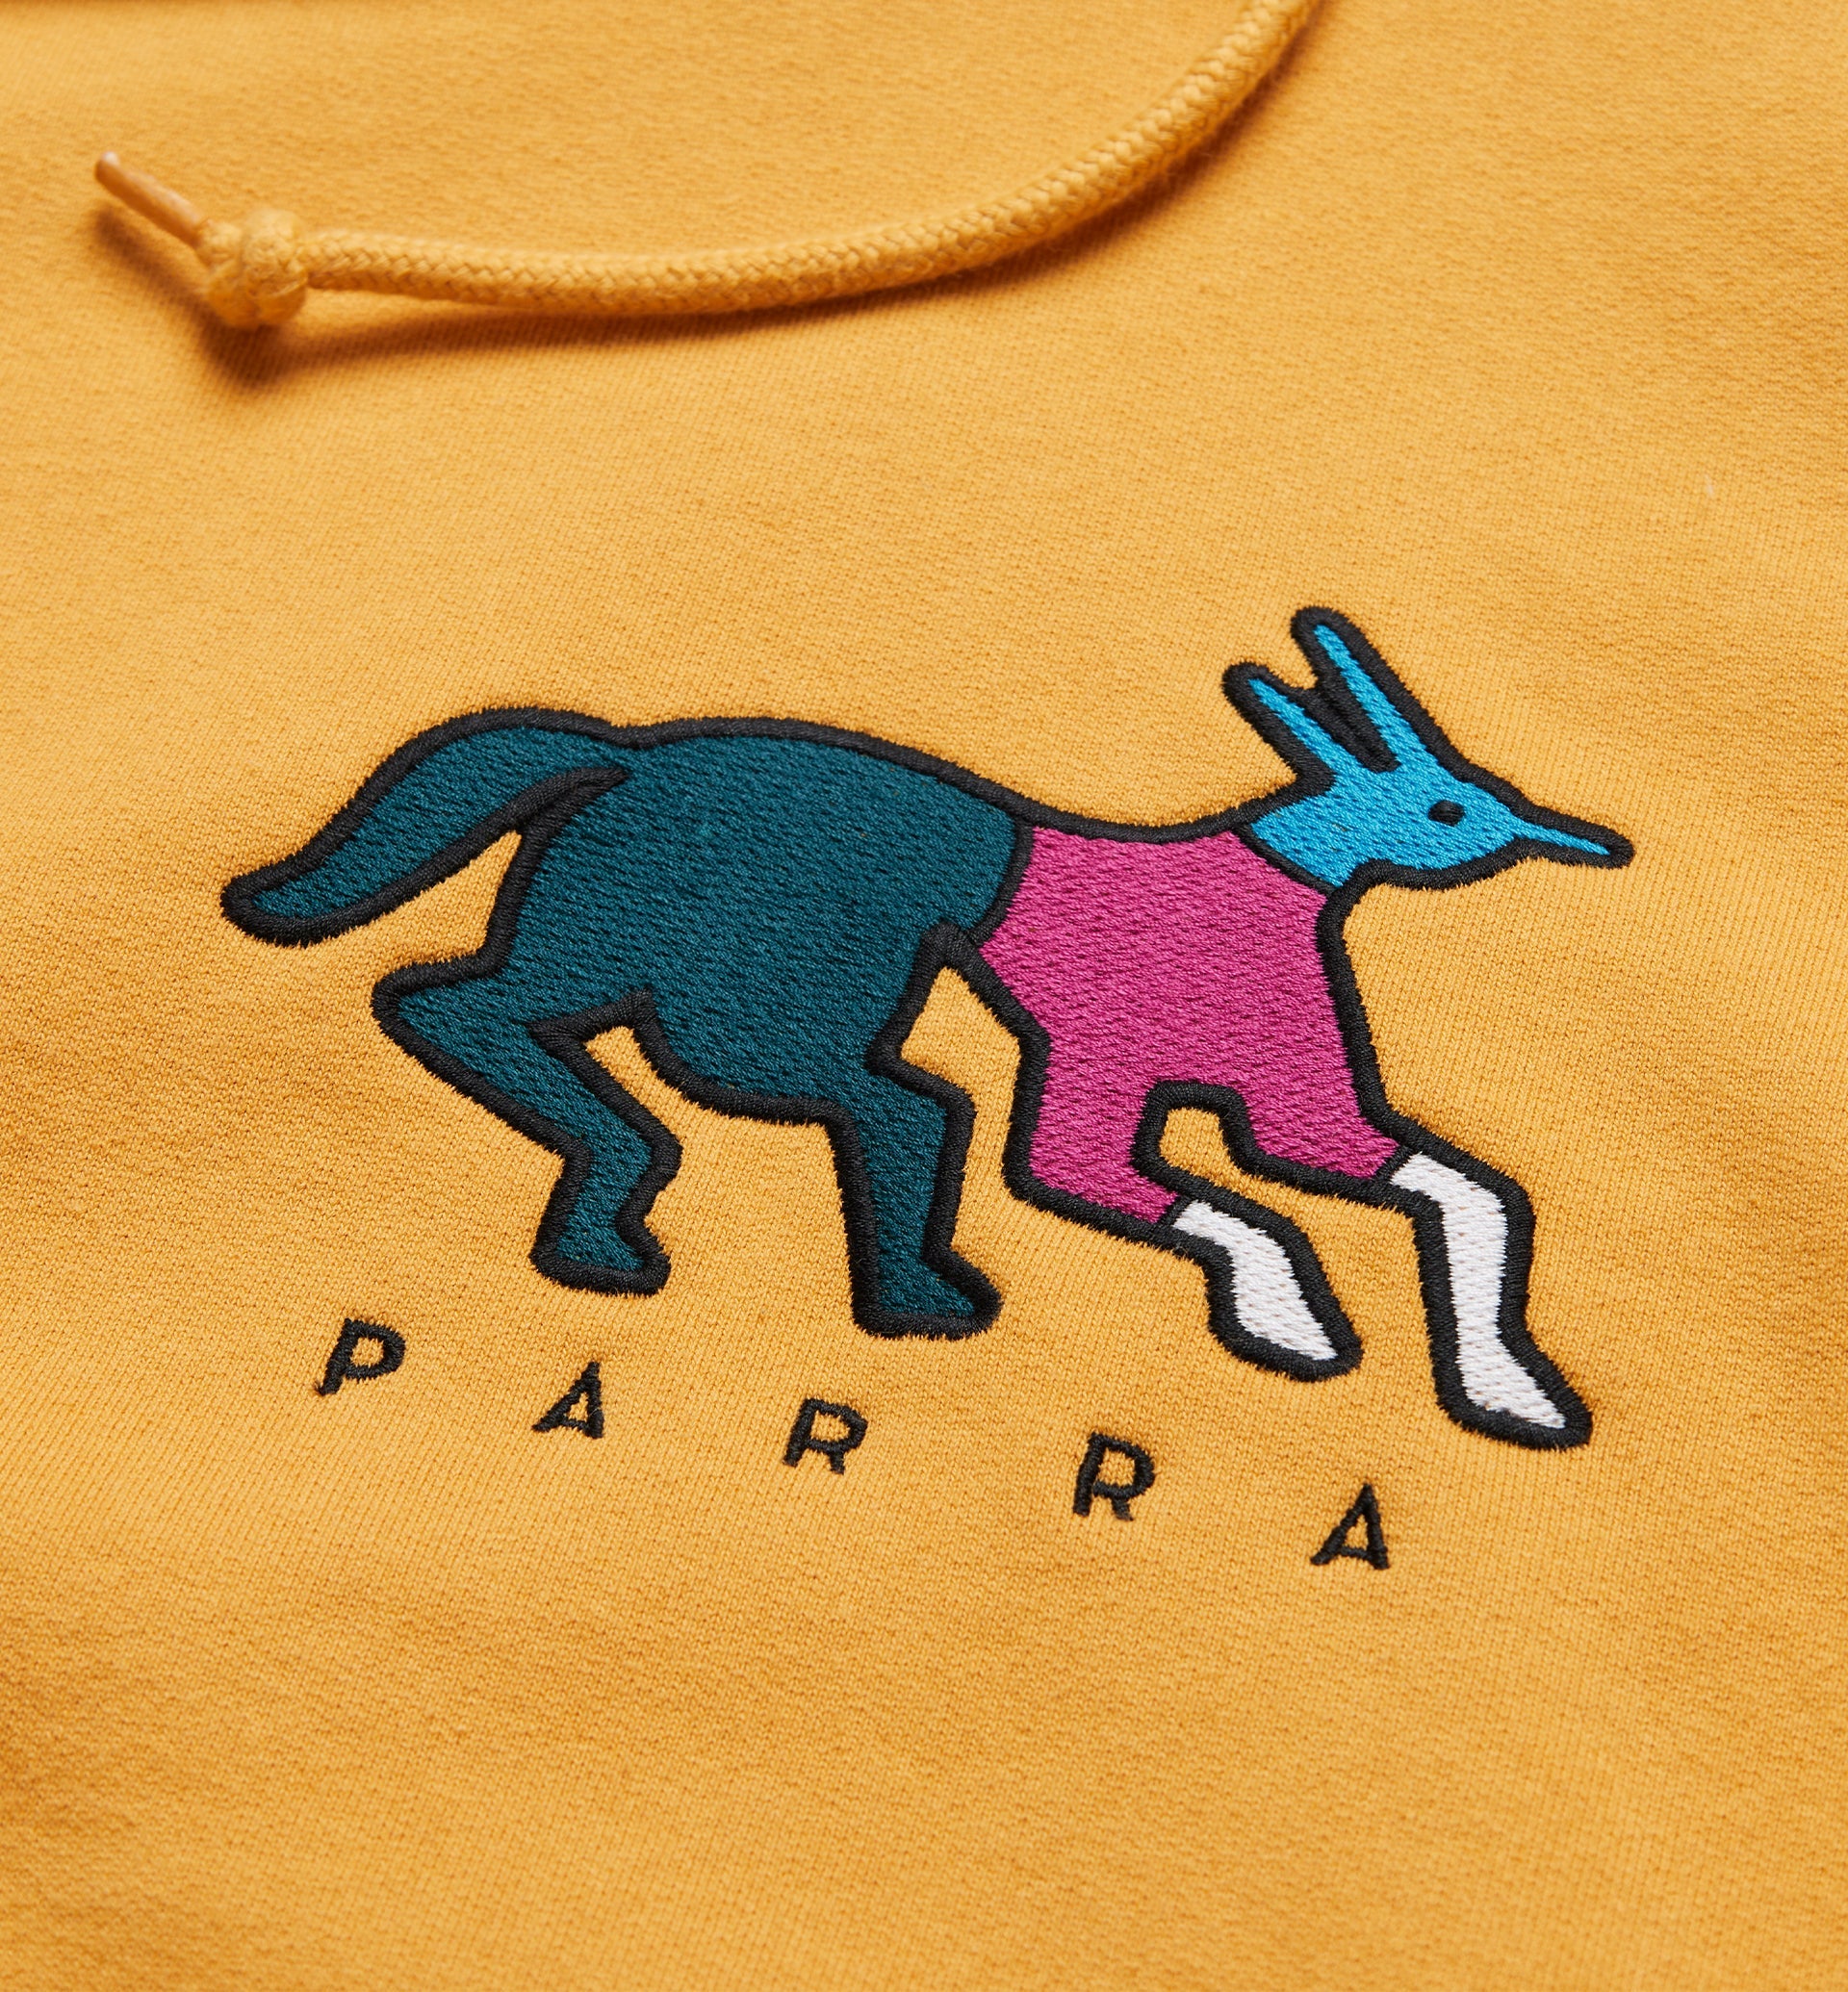 Parra - anxious dog hooded sweatshirt